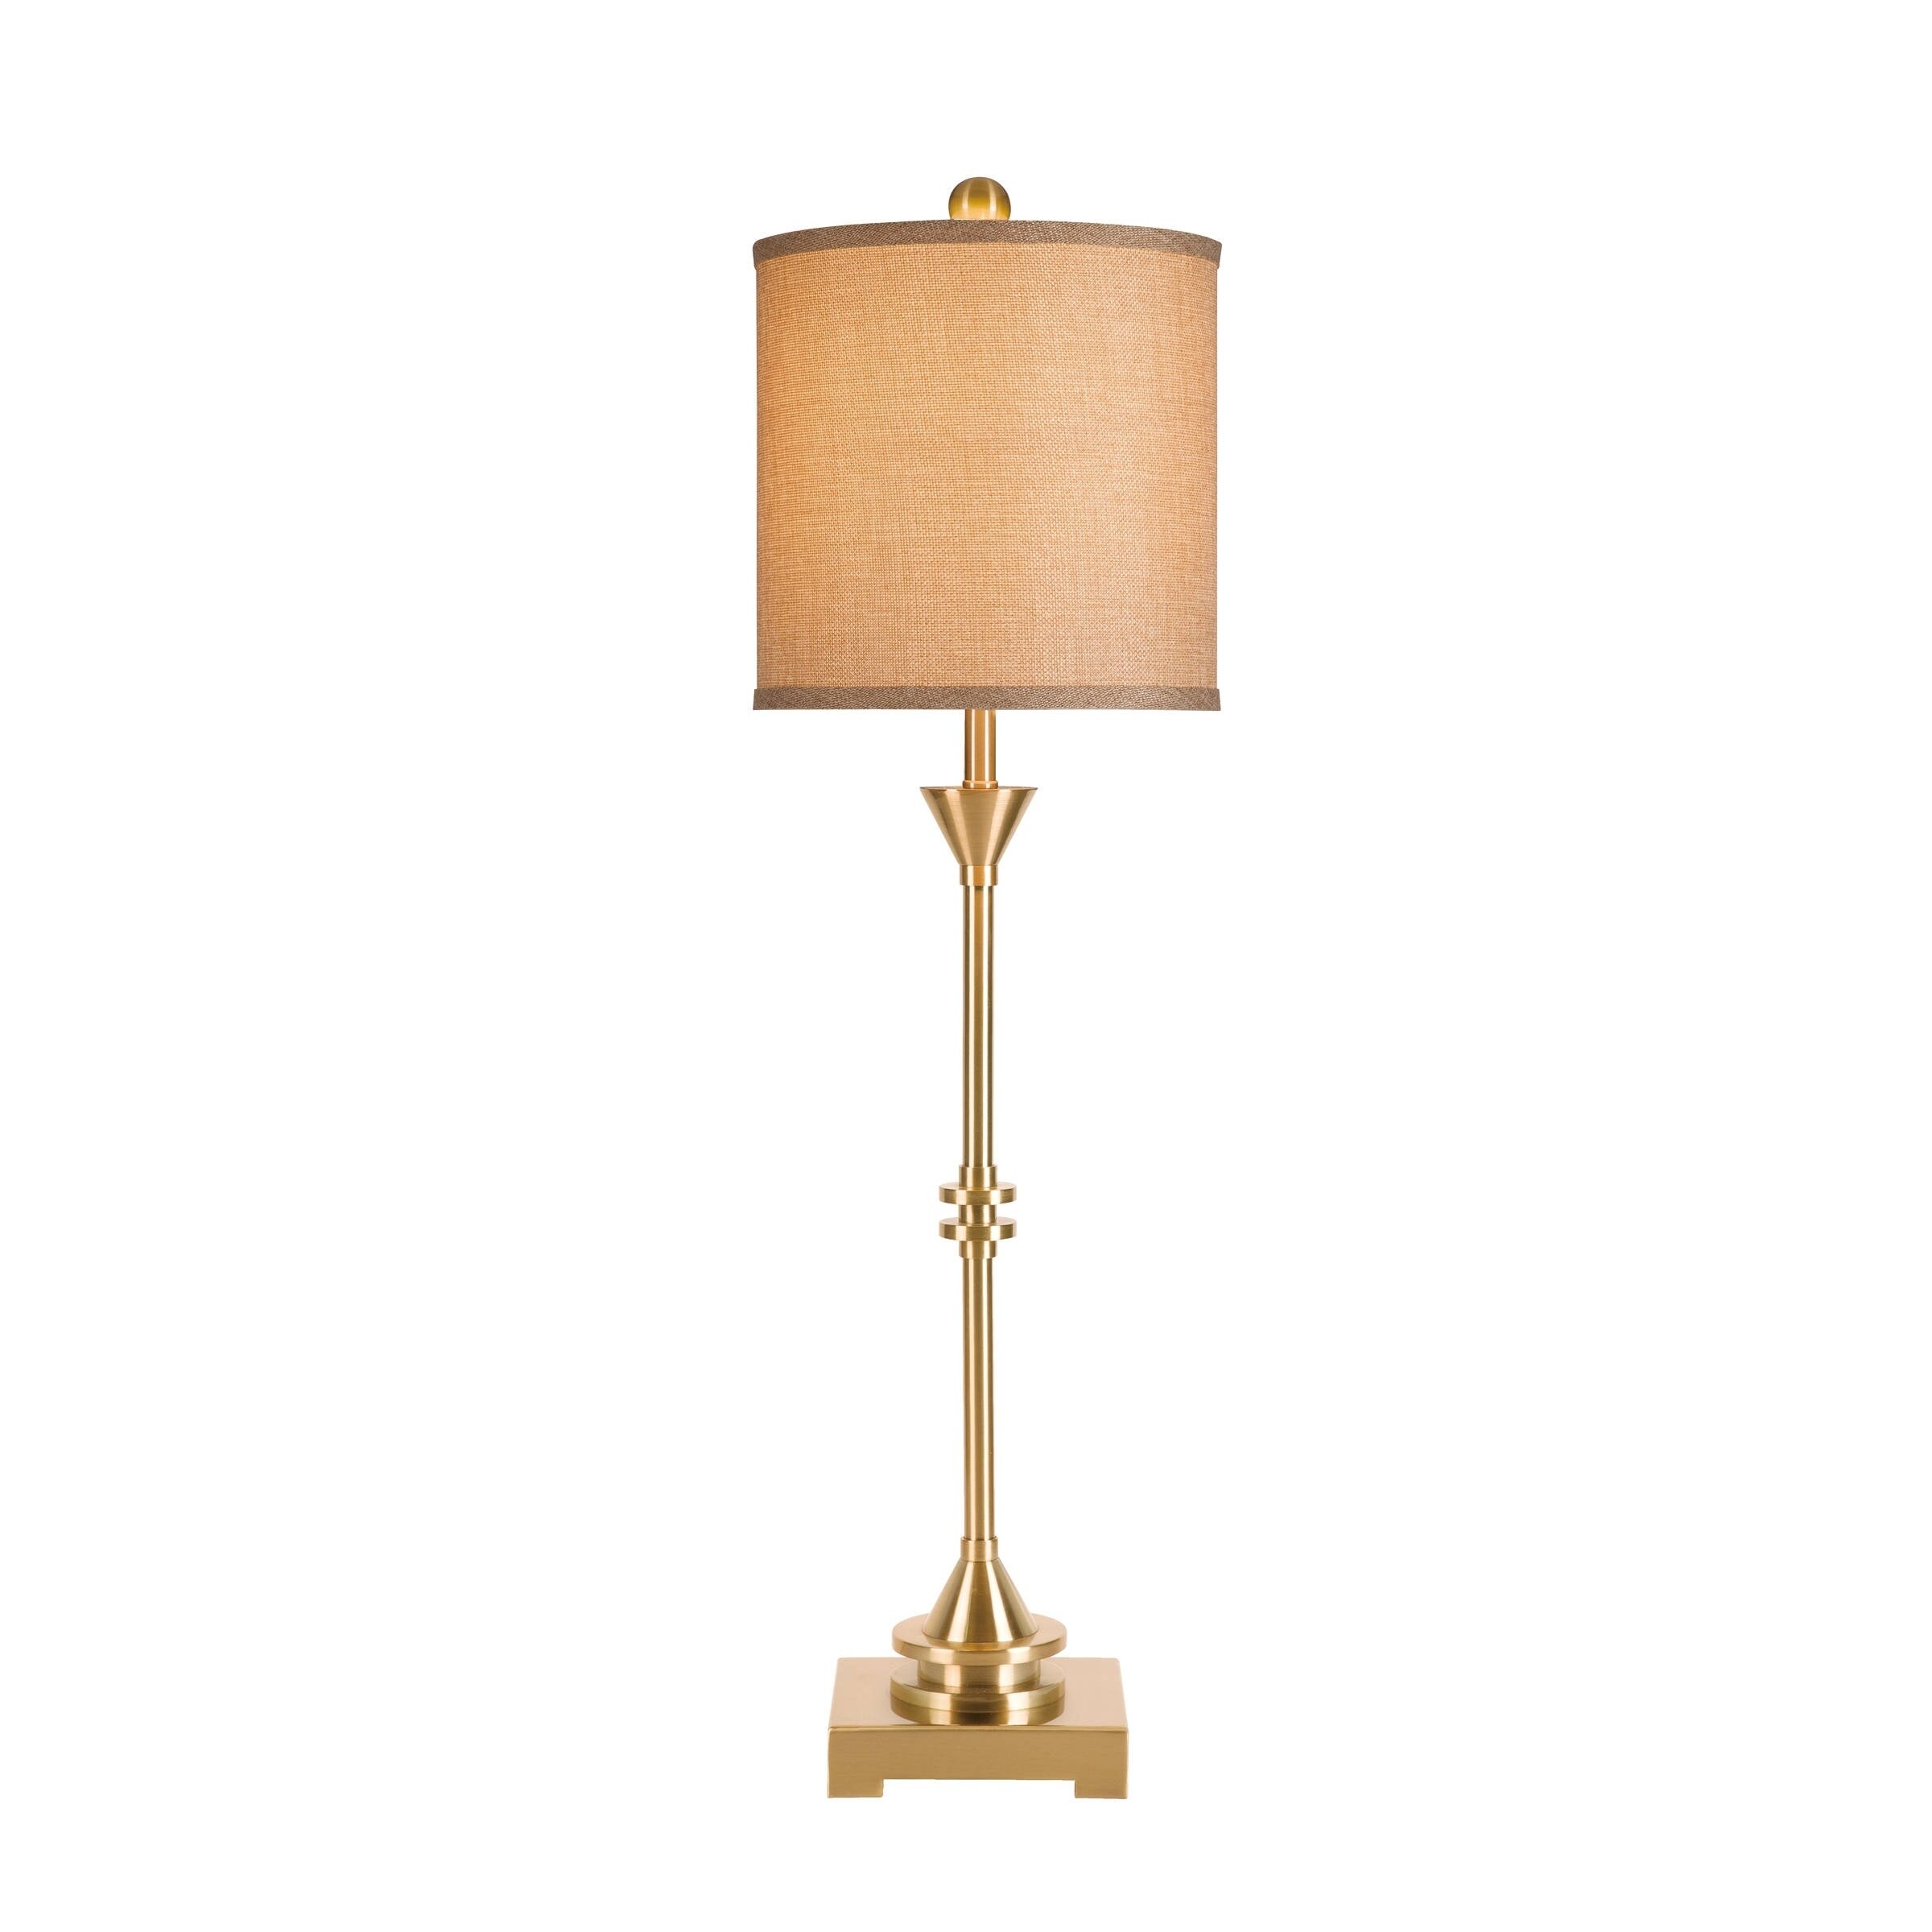 Shop Catalina Antique Brass Metal Buffet Lamp with Linen Shade - Free ...